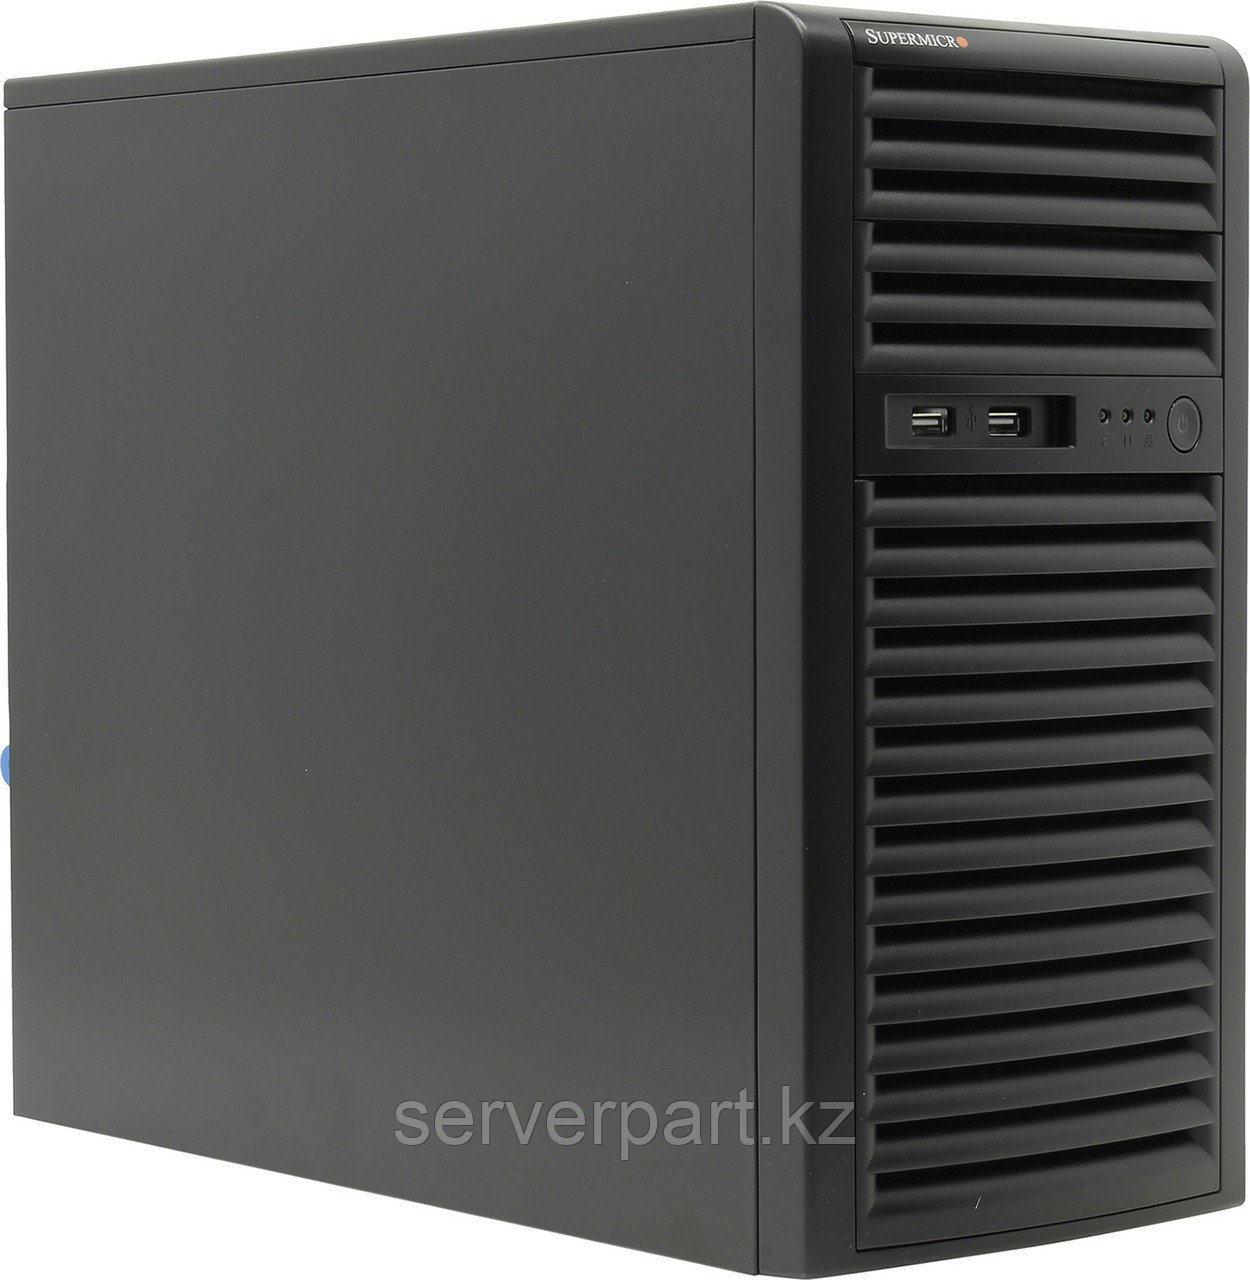 Сервер Supermicro SYS-5039C Tower 4LFF/4-core intel xeon E2124 3.3GHz/64GB UDIMM nECC/1x480GB SSD RI Hyb